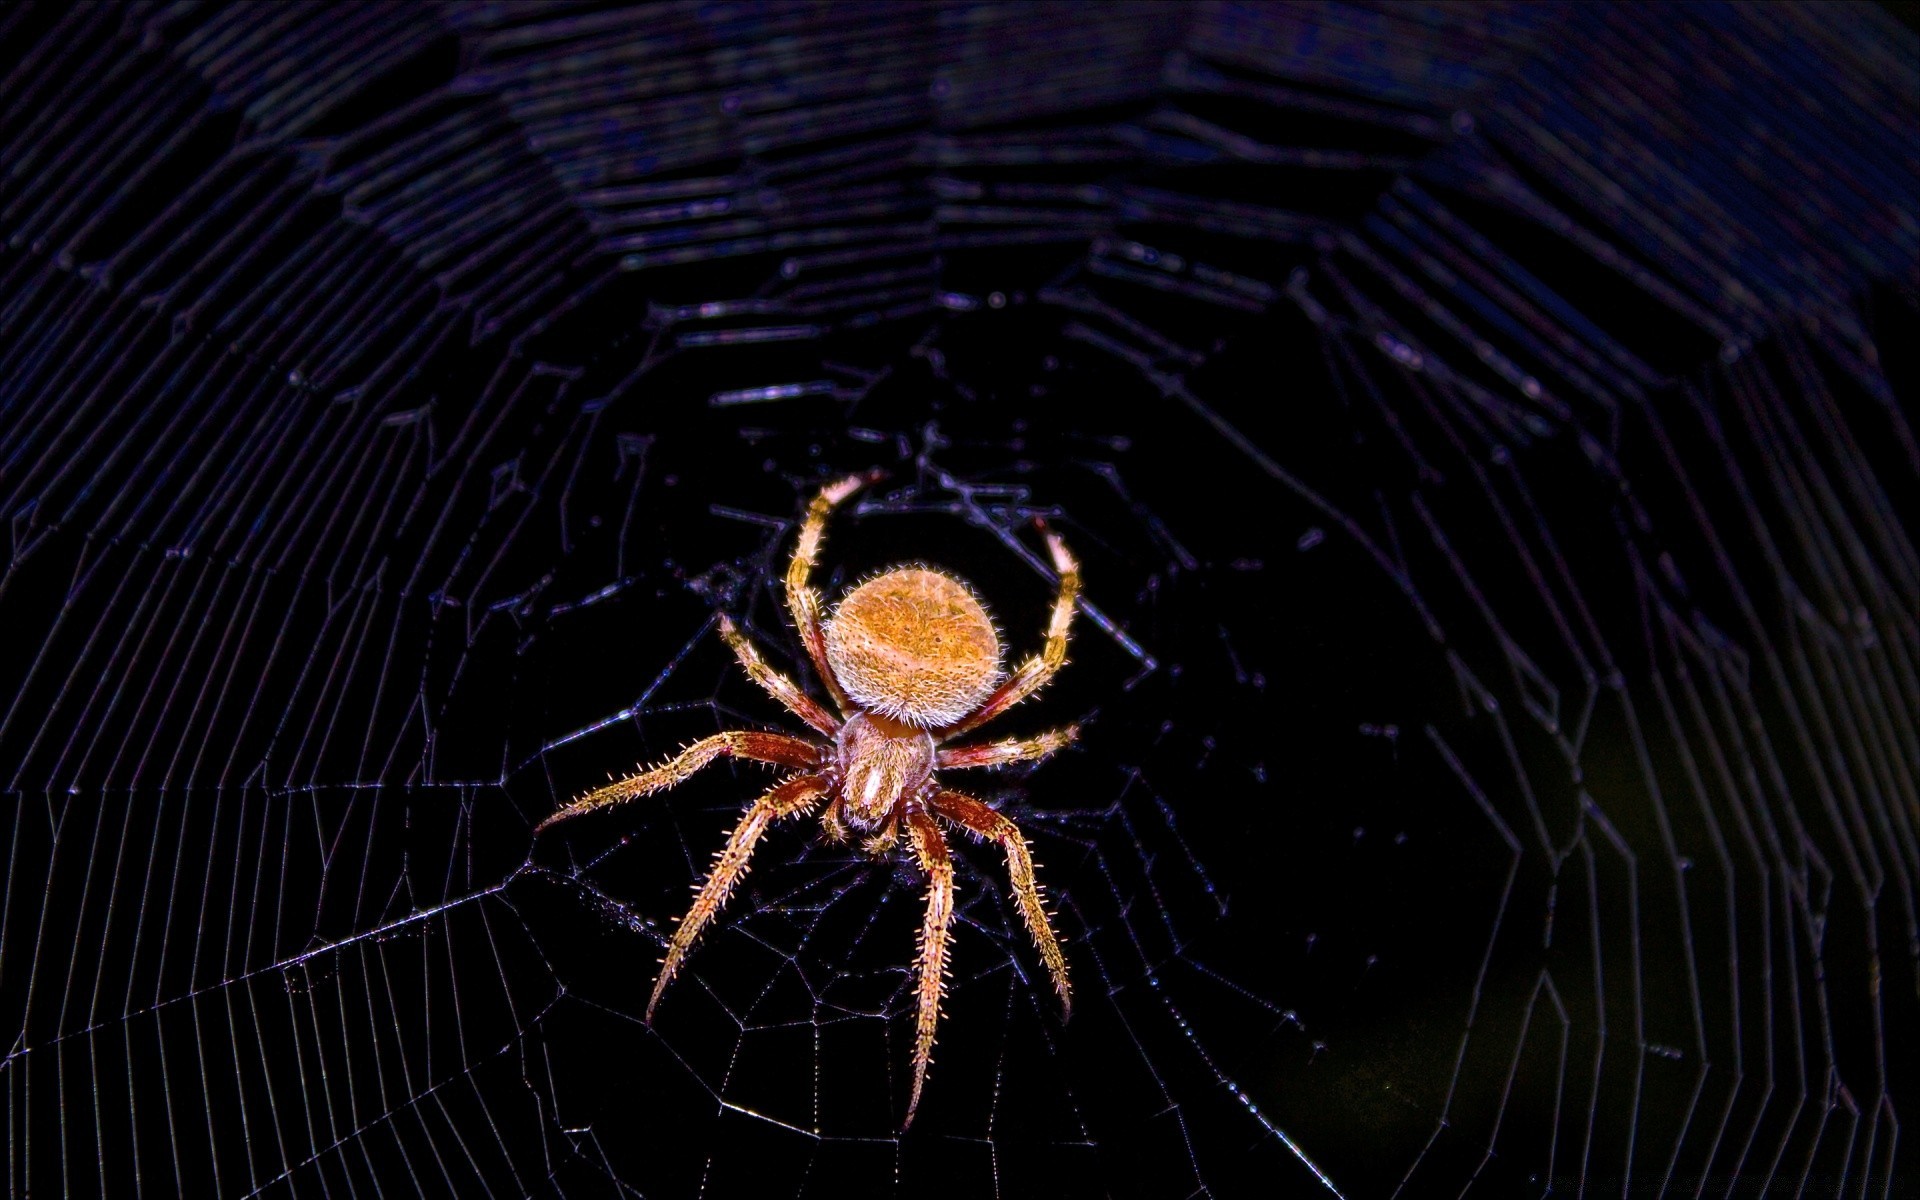 insects spider arachnid spiderweb cobweb trap creepy web phobia insect scary fear venom halloween invertebrate dew tarantula eerie poison